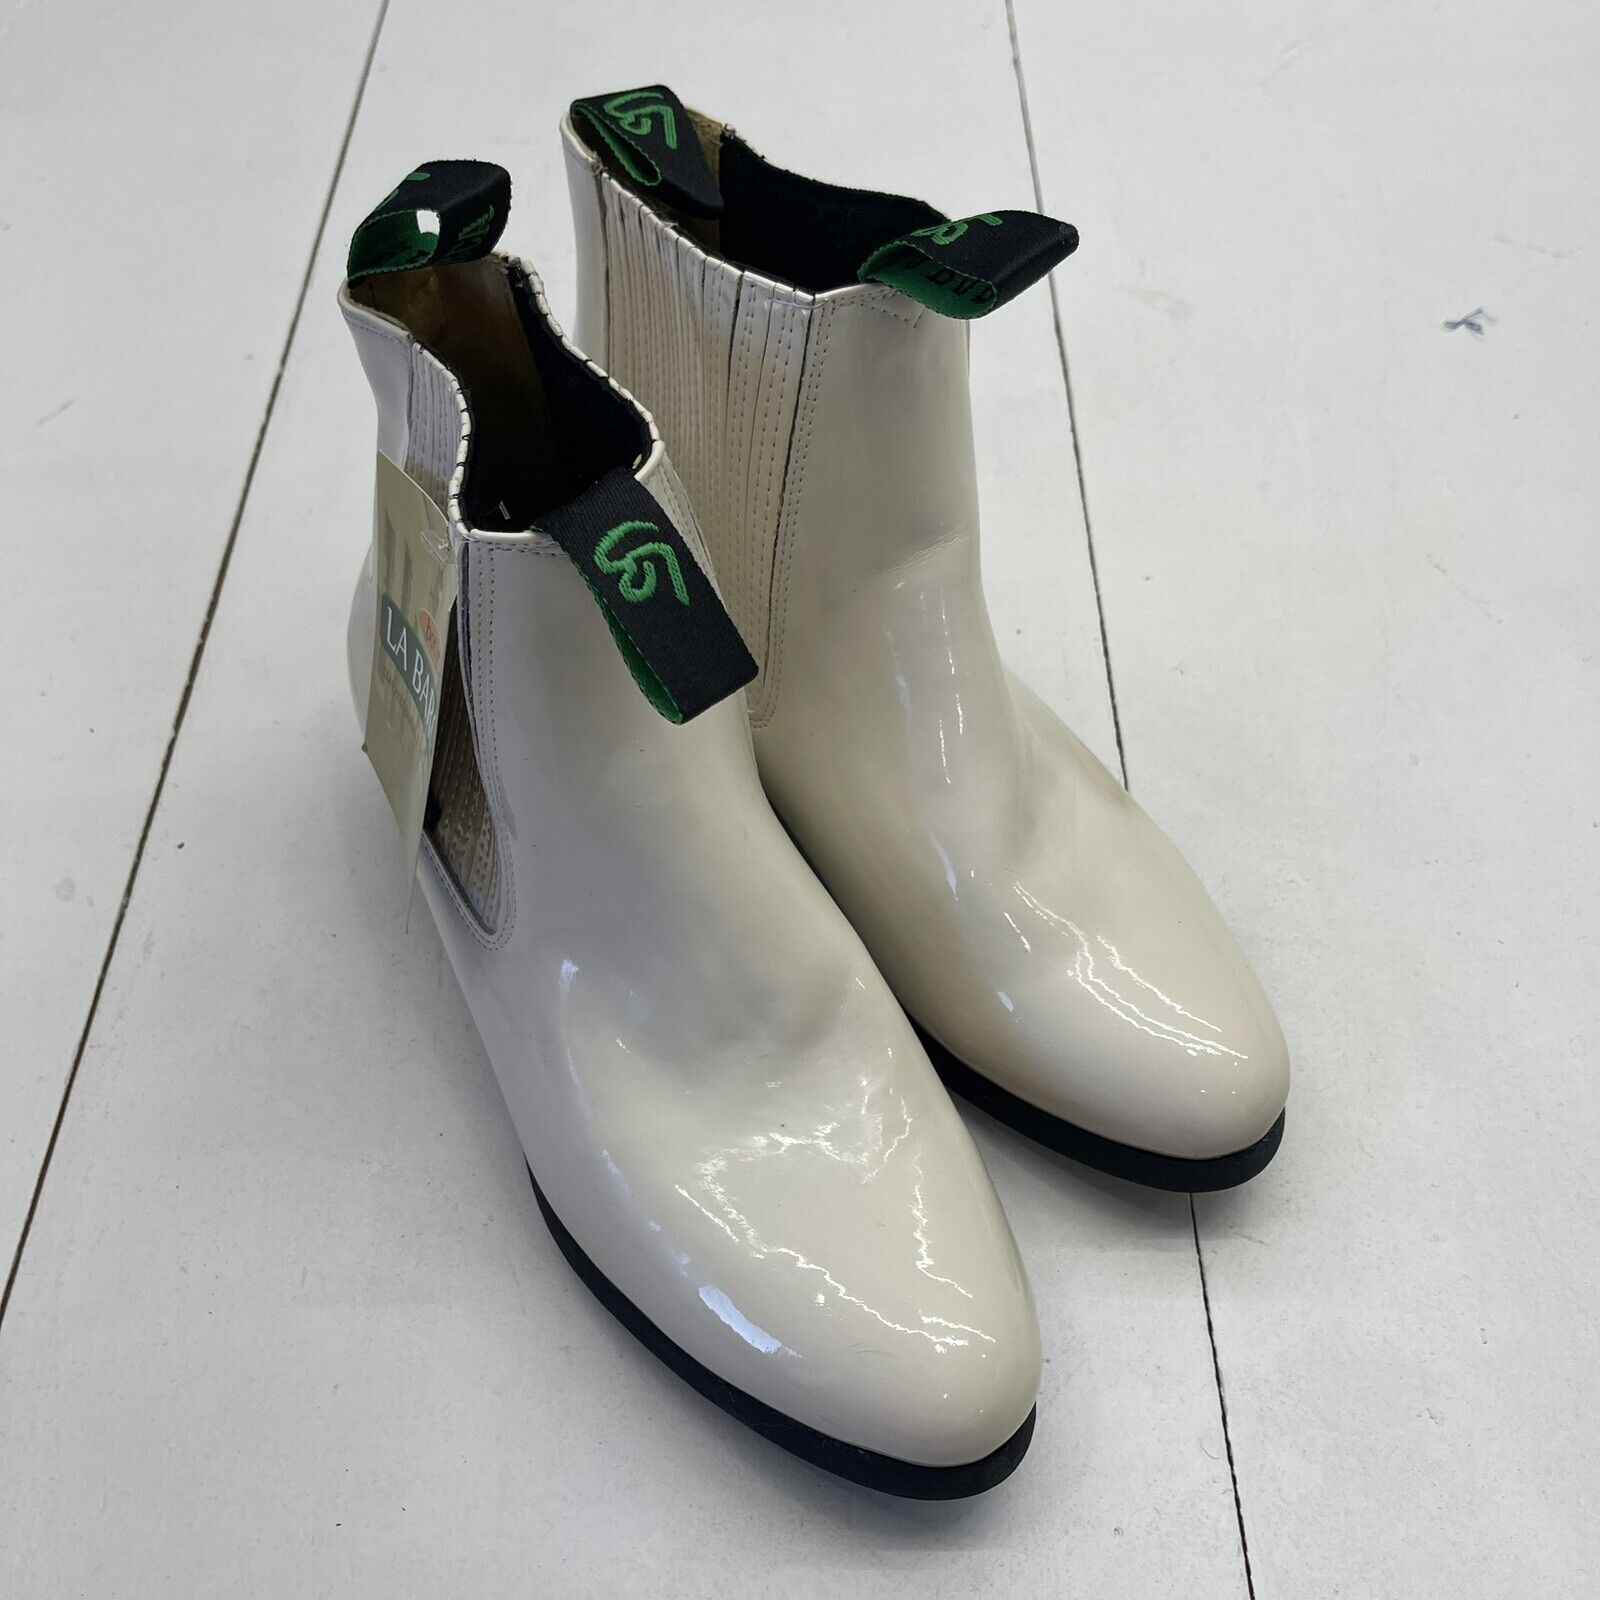 La Barca Botin White Charol Patent Leather Boots Mens Size 26.5 US7.5